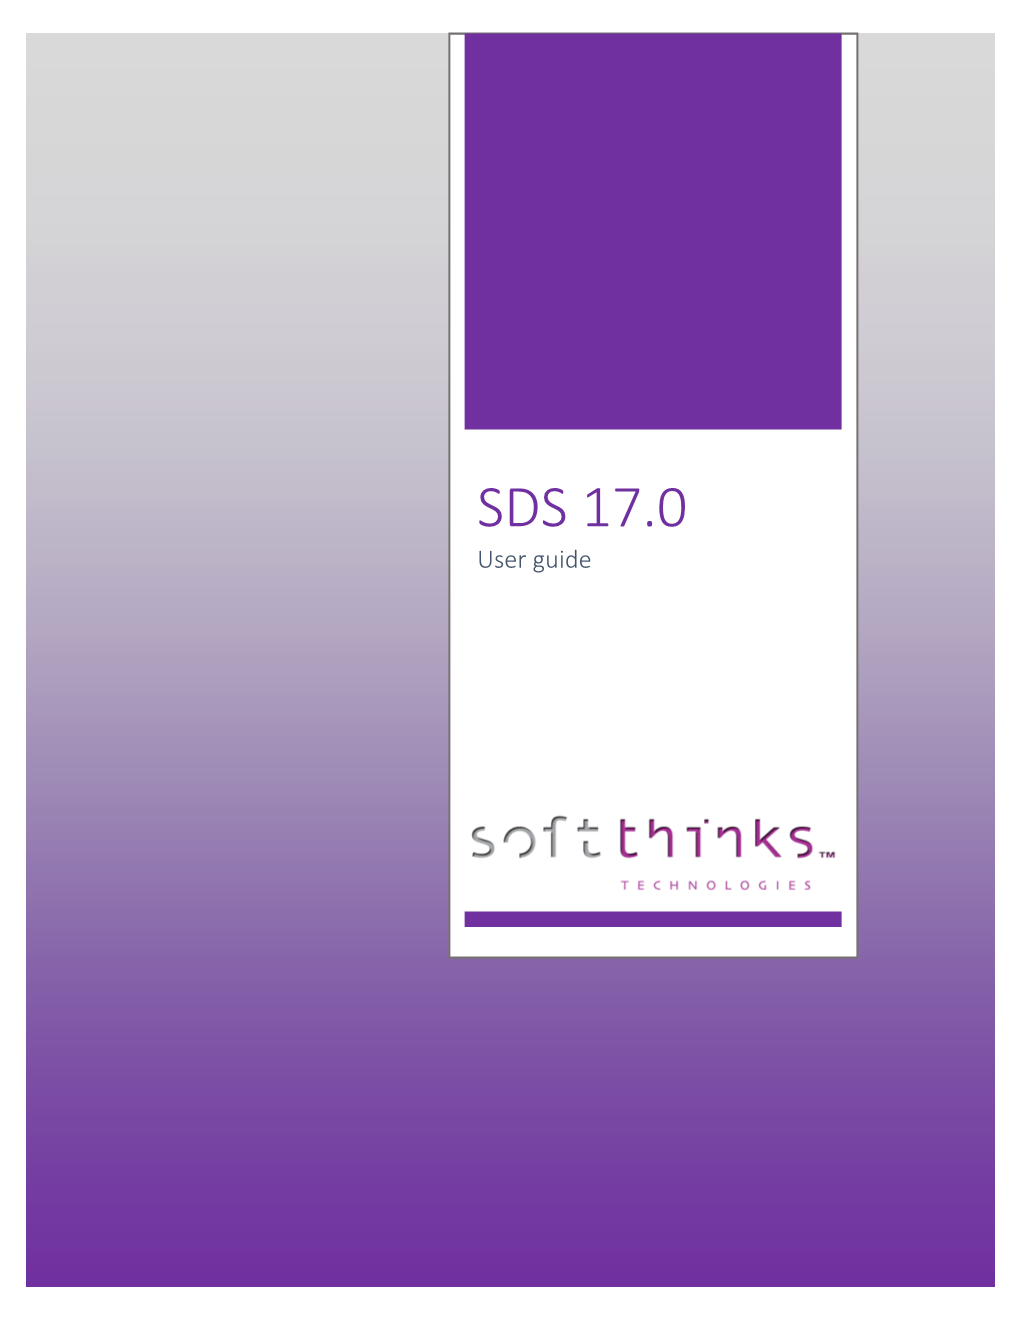 SDS 17.0 User Guide